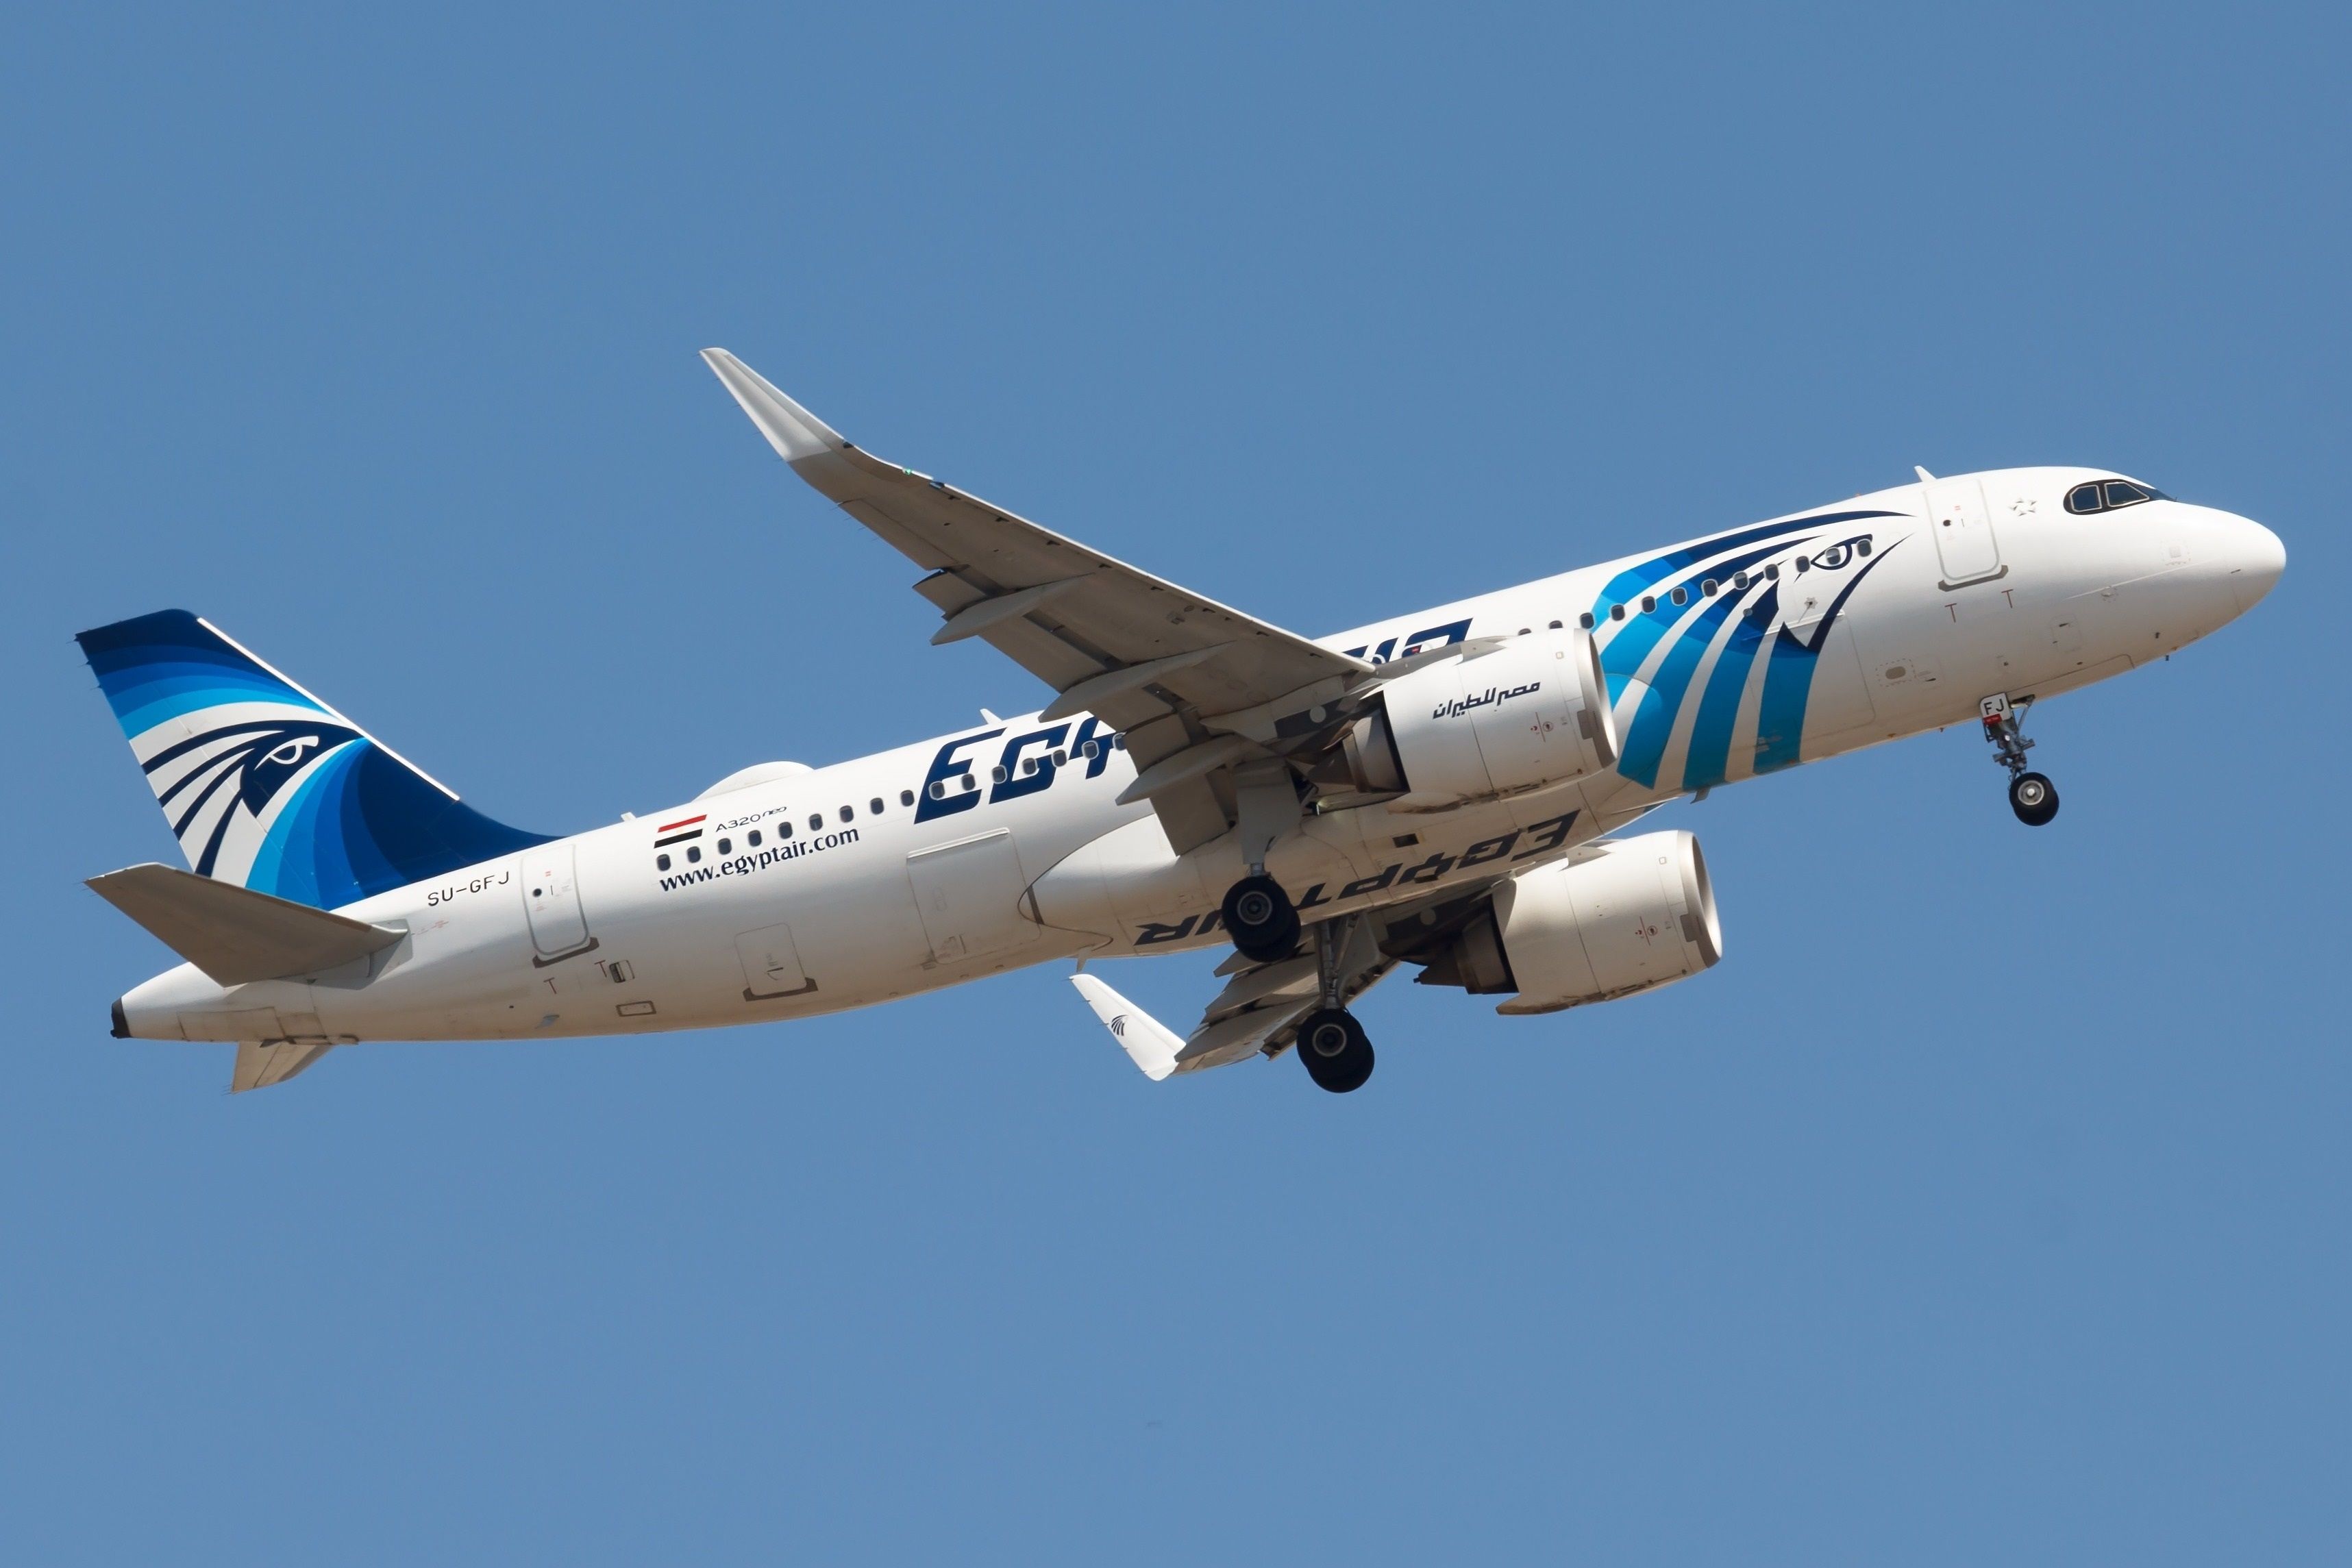 EgyptAir A320neo 3.2 taking off shutterstock_2367117021-1